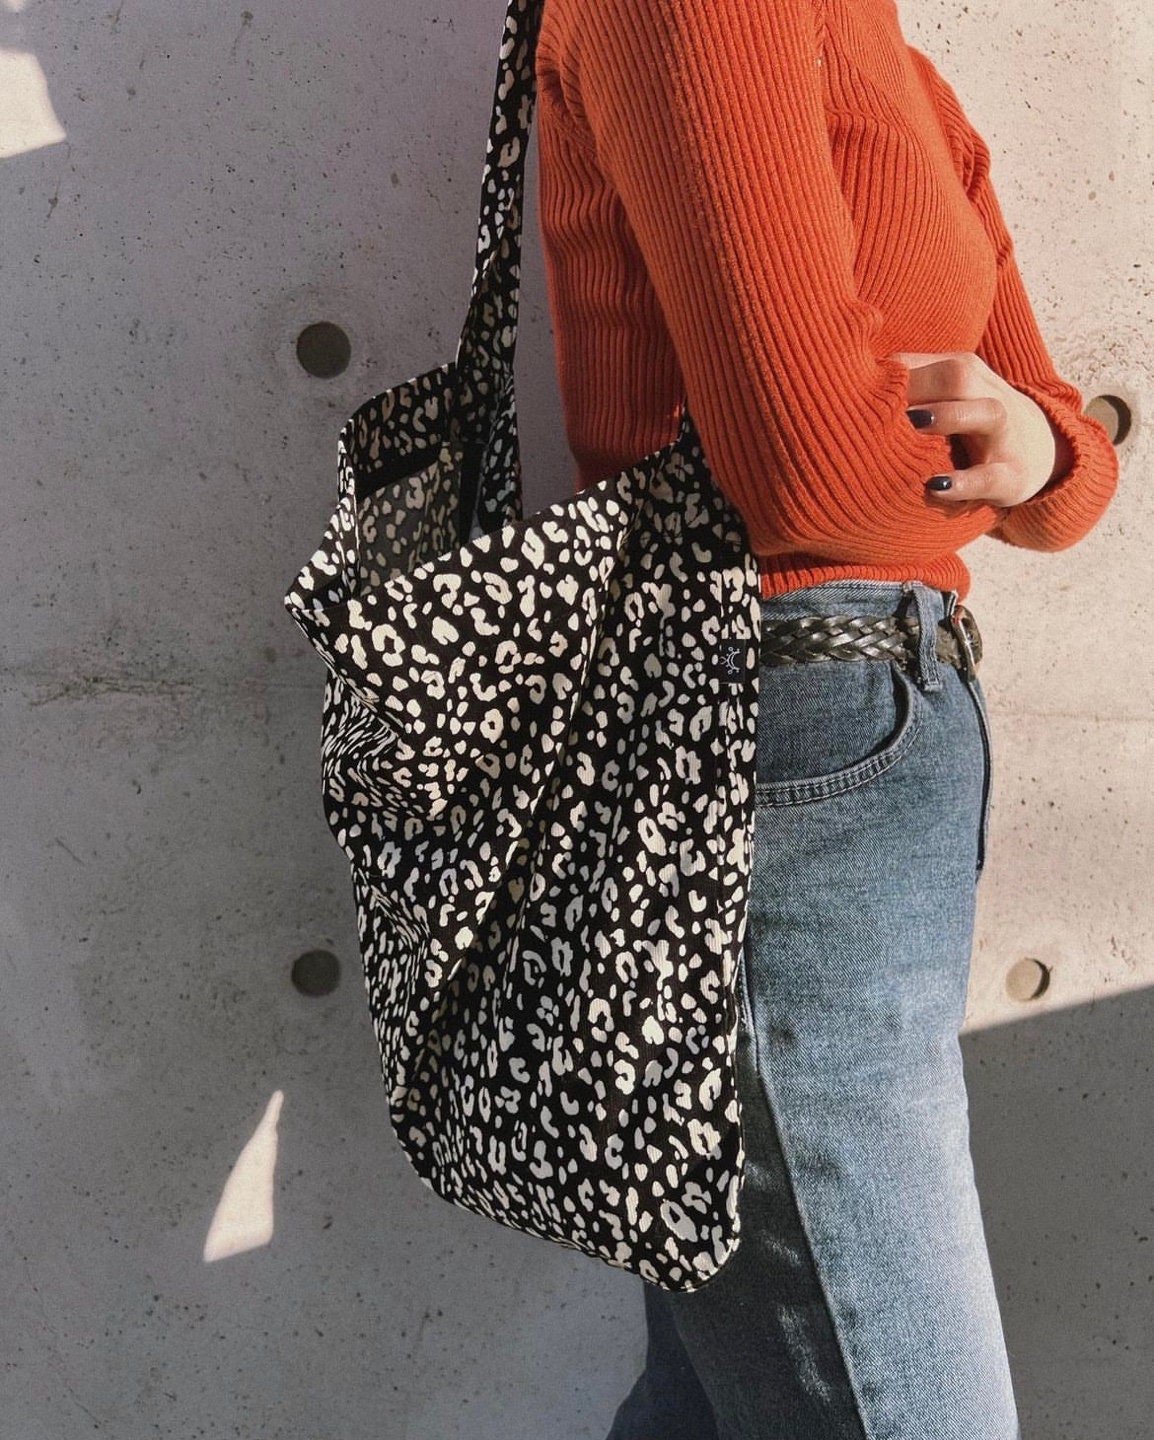 Buy Large Leopard Handbag Chain Tote Shoulder Bag for Women - Animal Print  Snap Closure Vegan Leather (Khaki) at